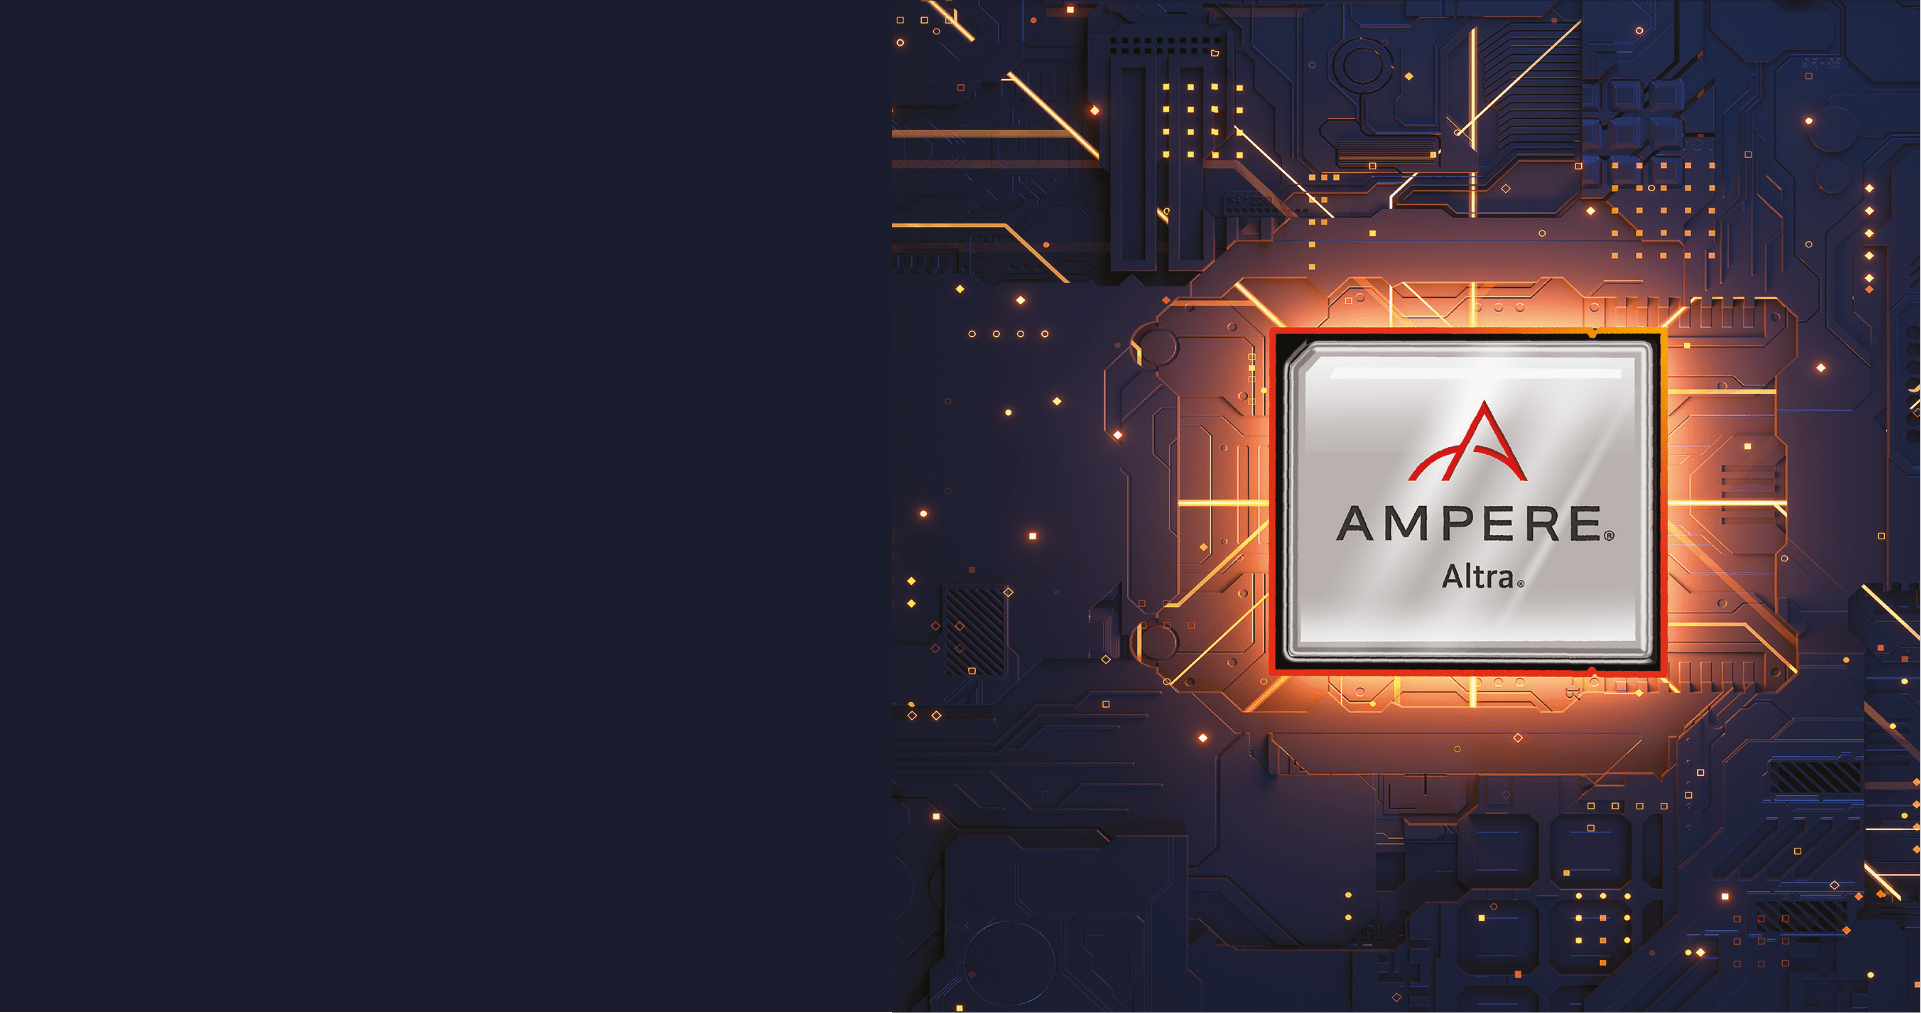 Ampere Altra powerful processor